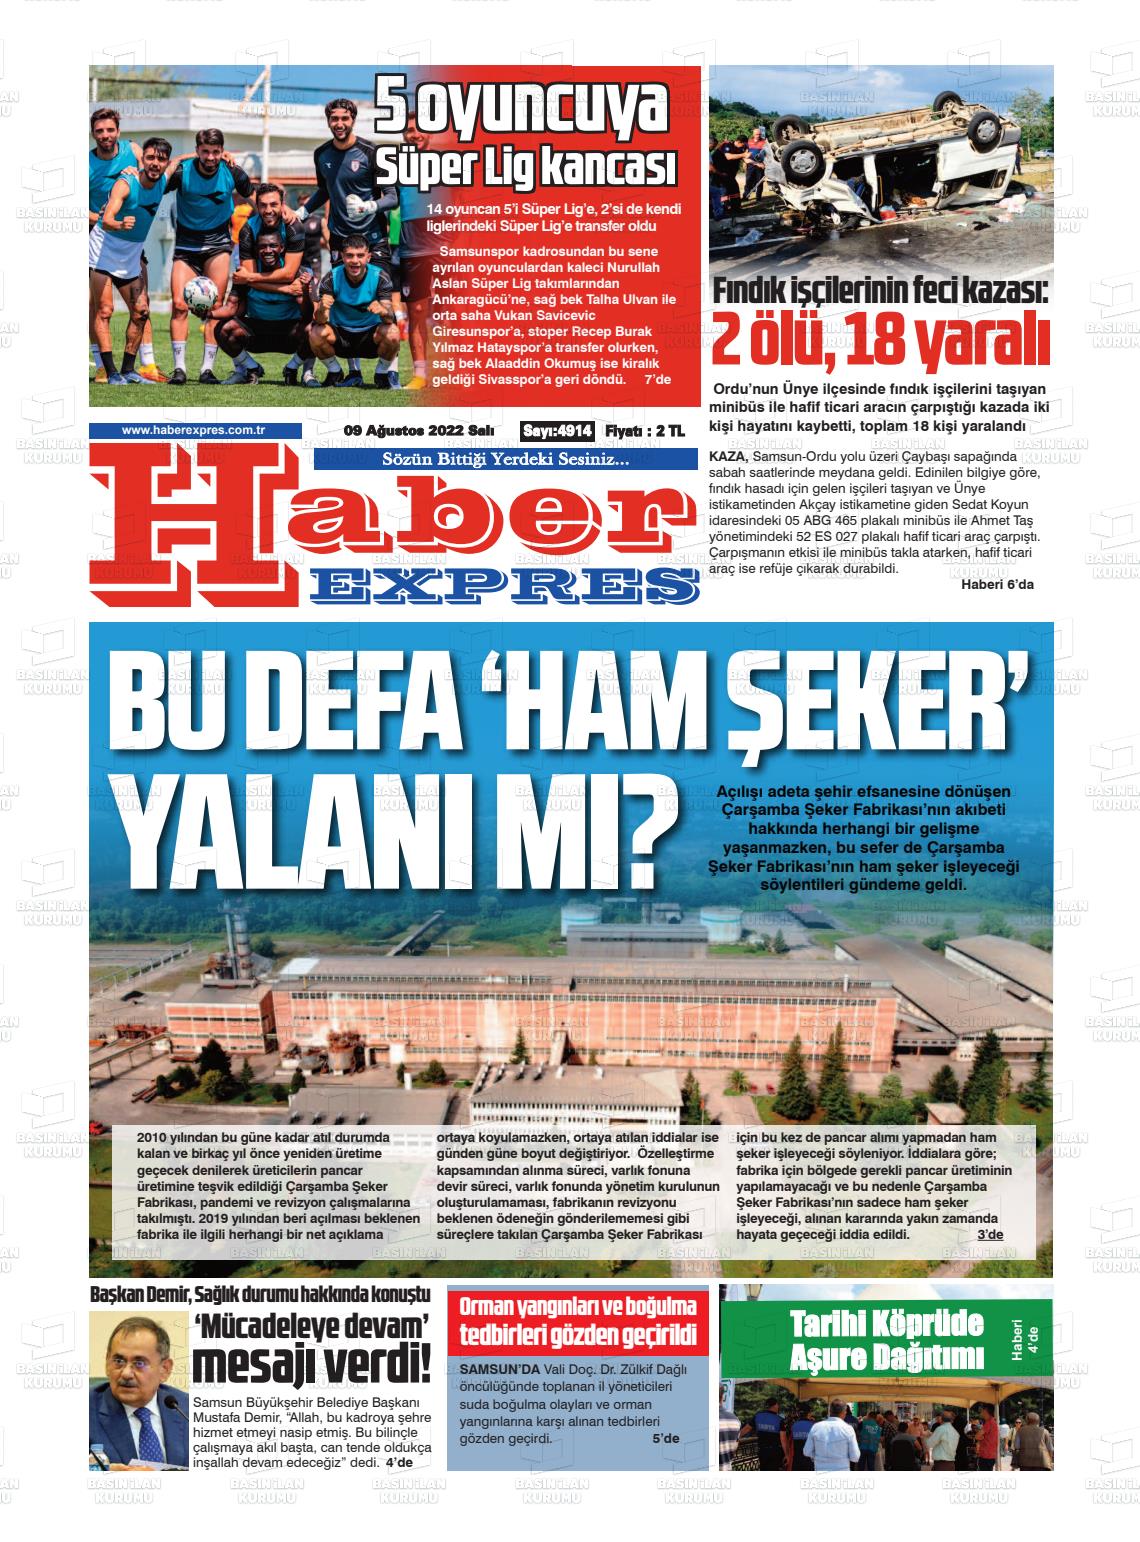 09 Ağustos 2022 Haber Expres Gazete Manşeti